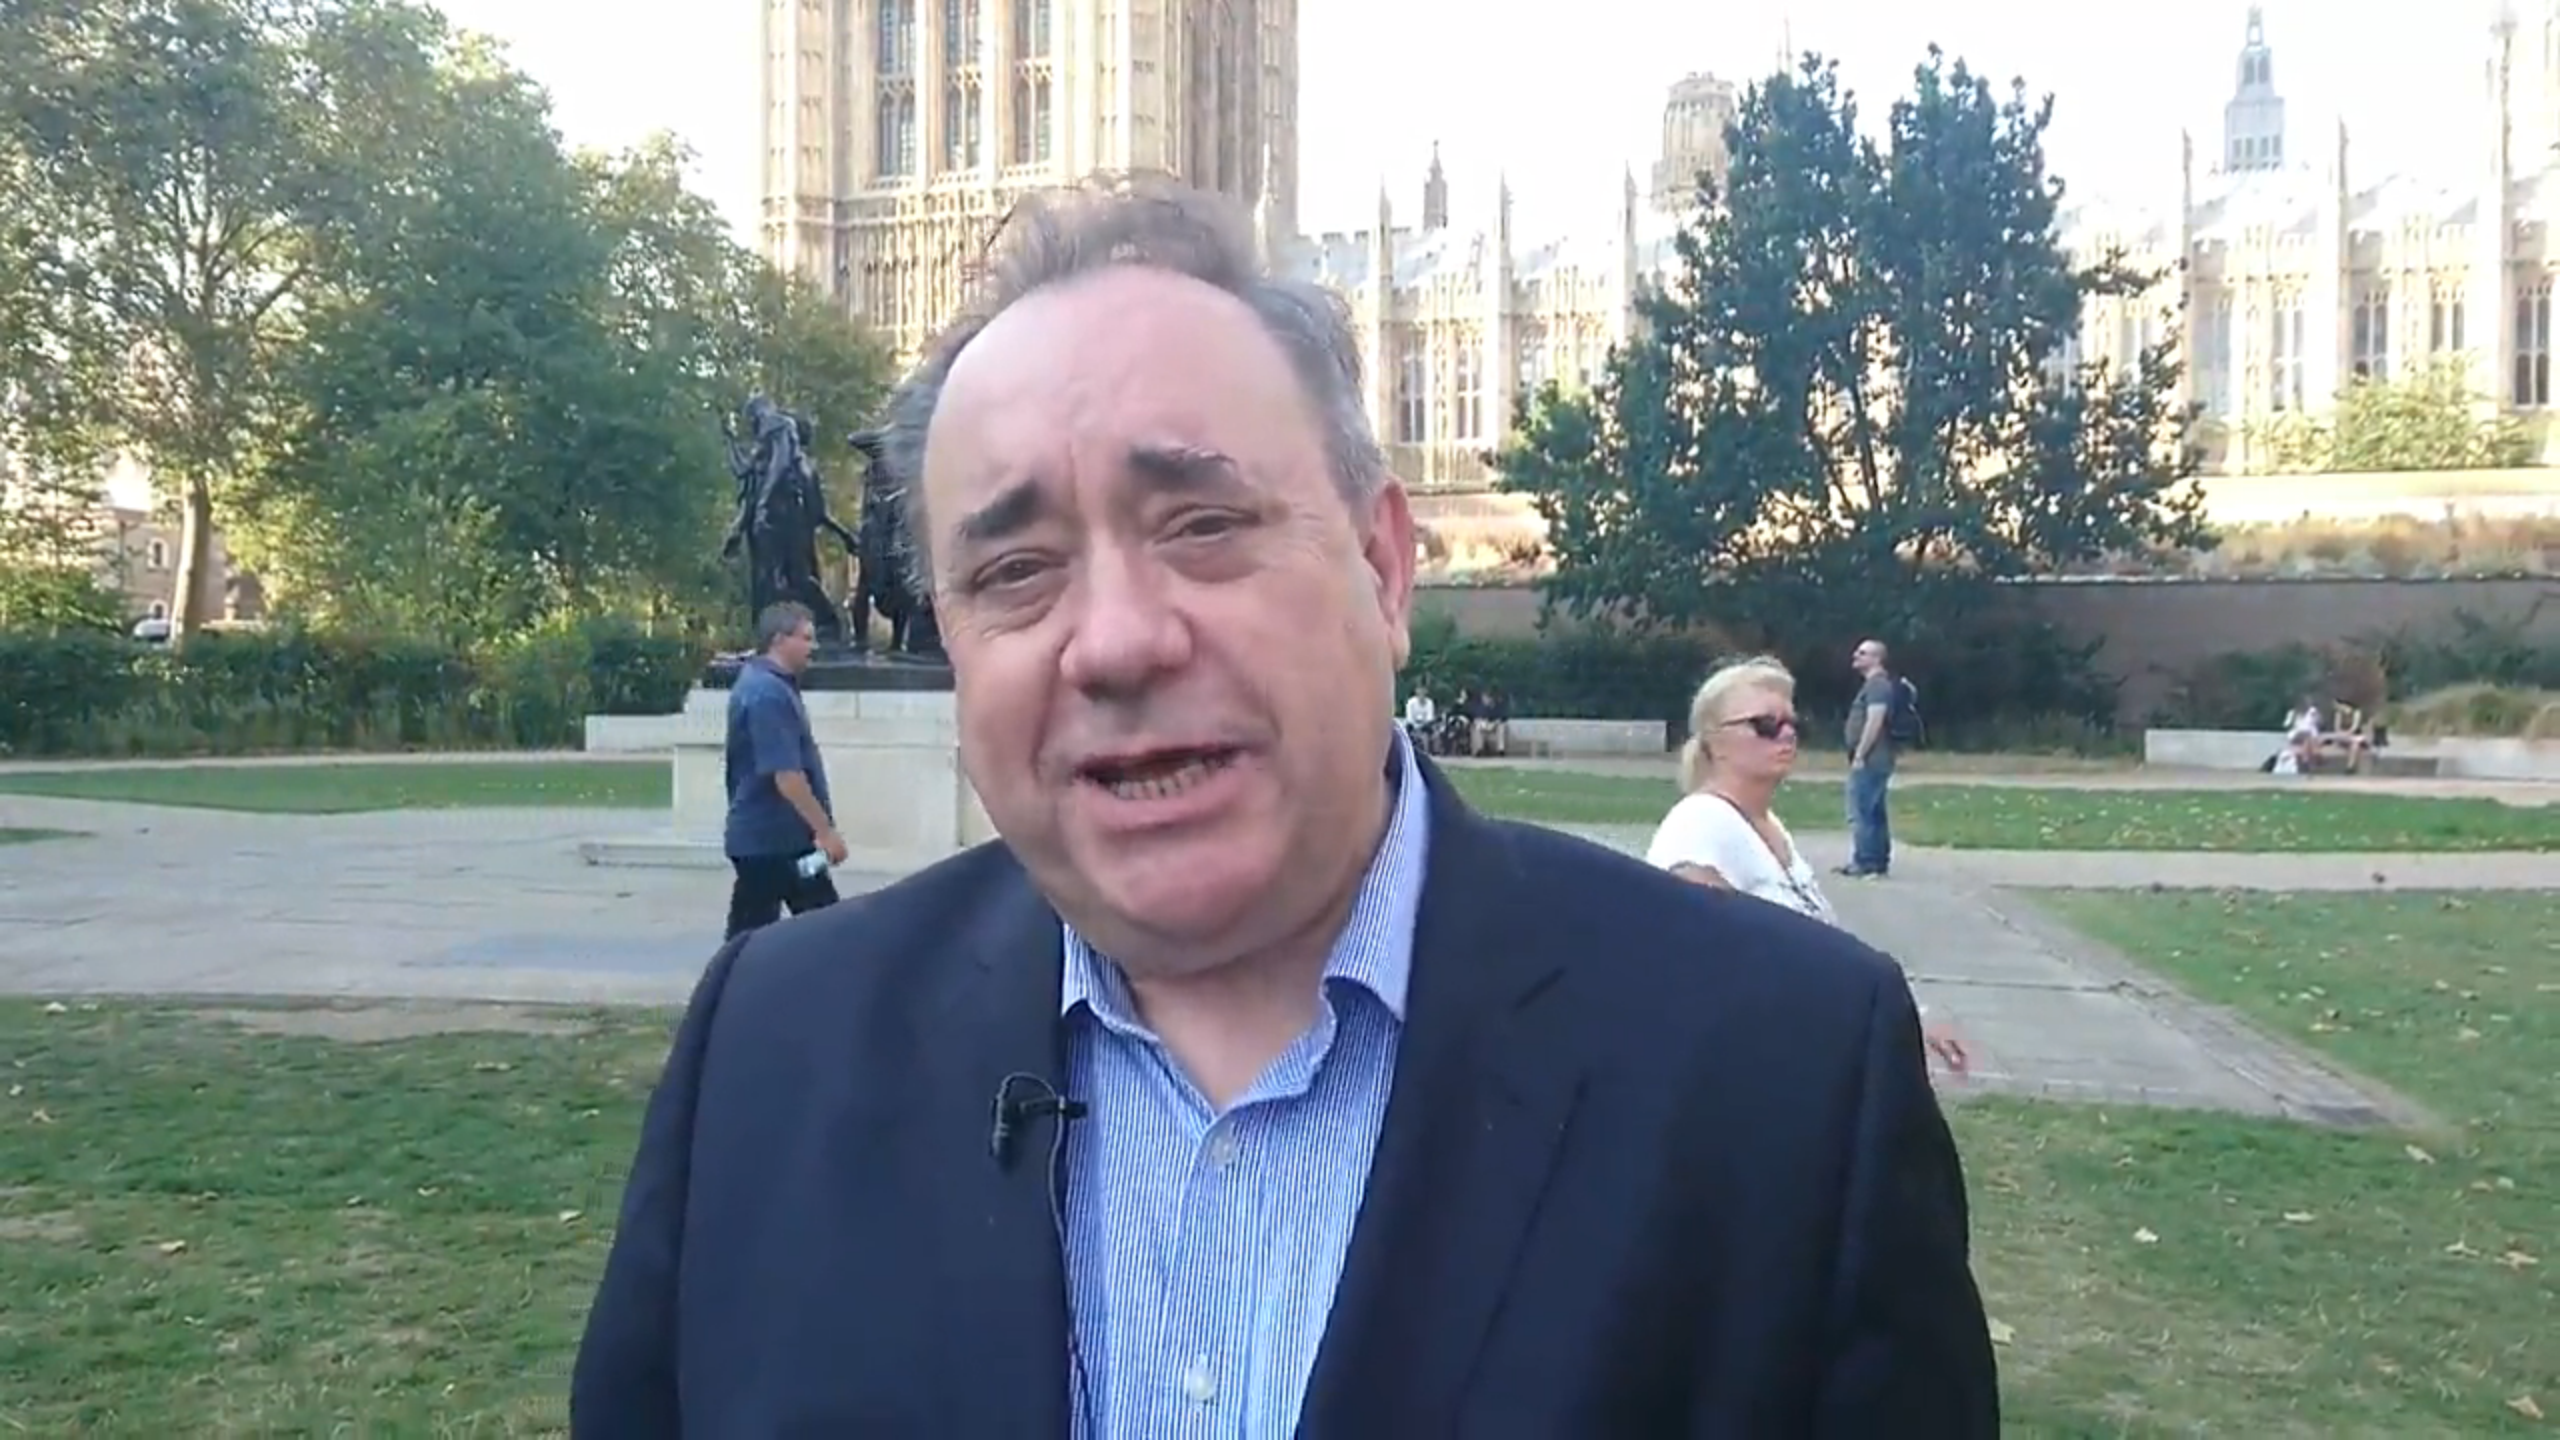 Alex Salmond outside Westminster